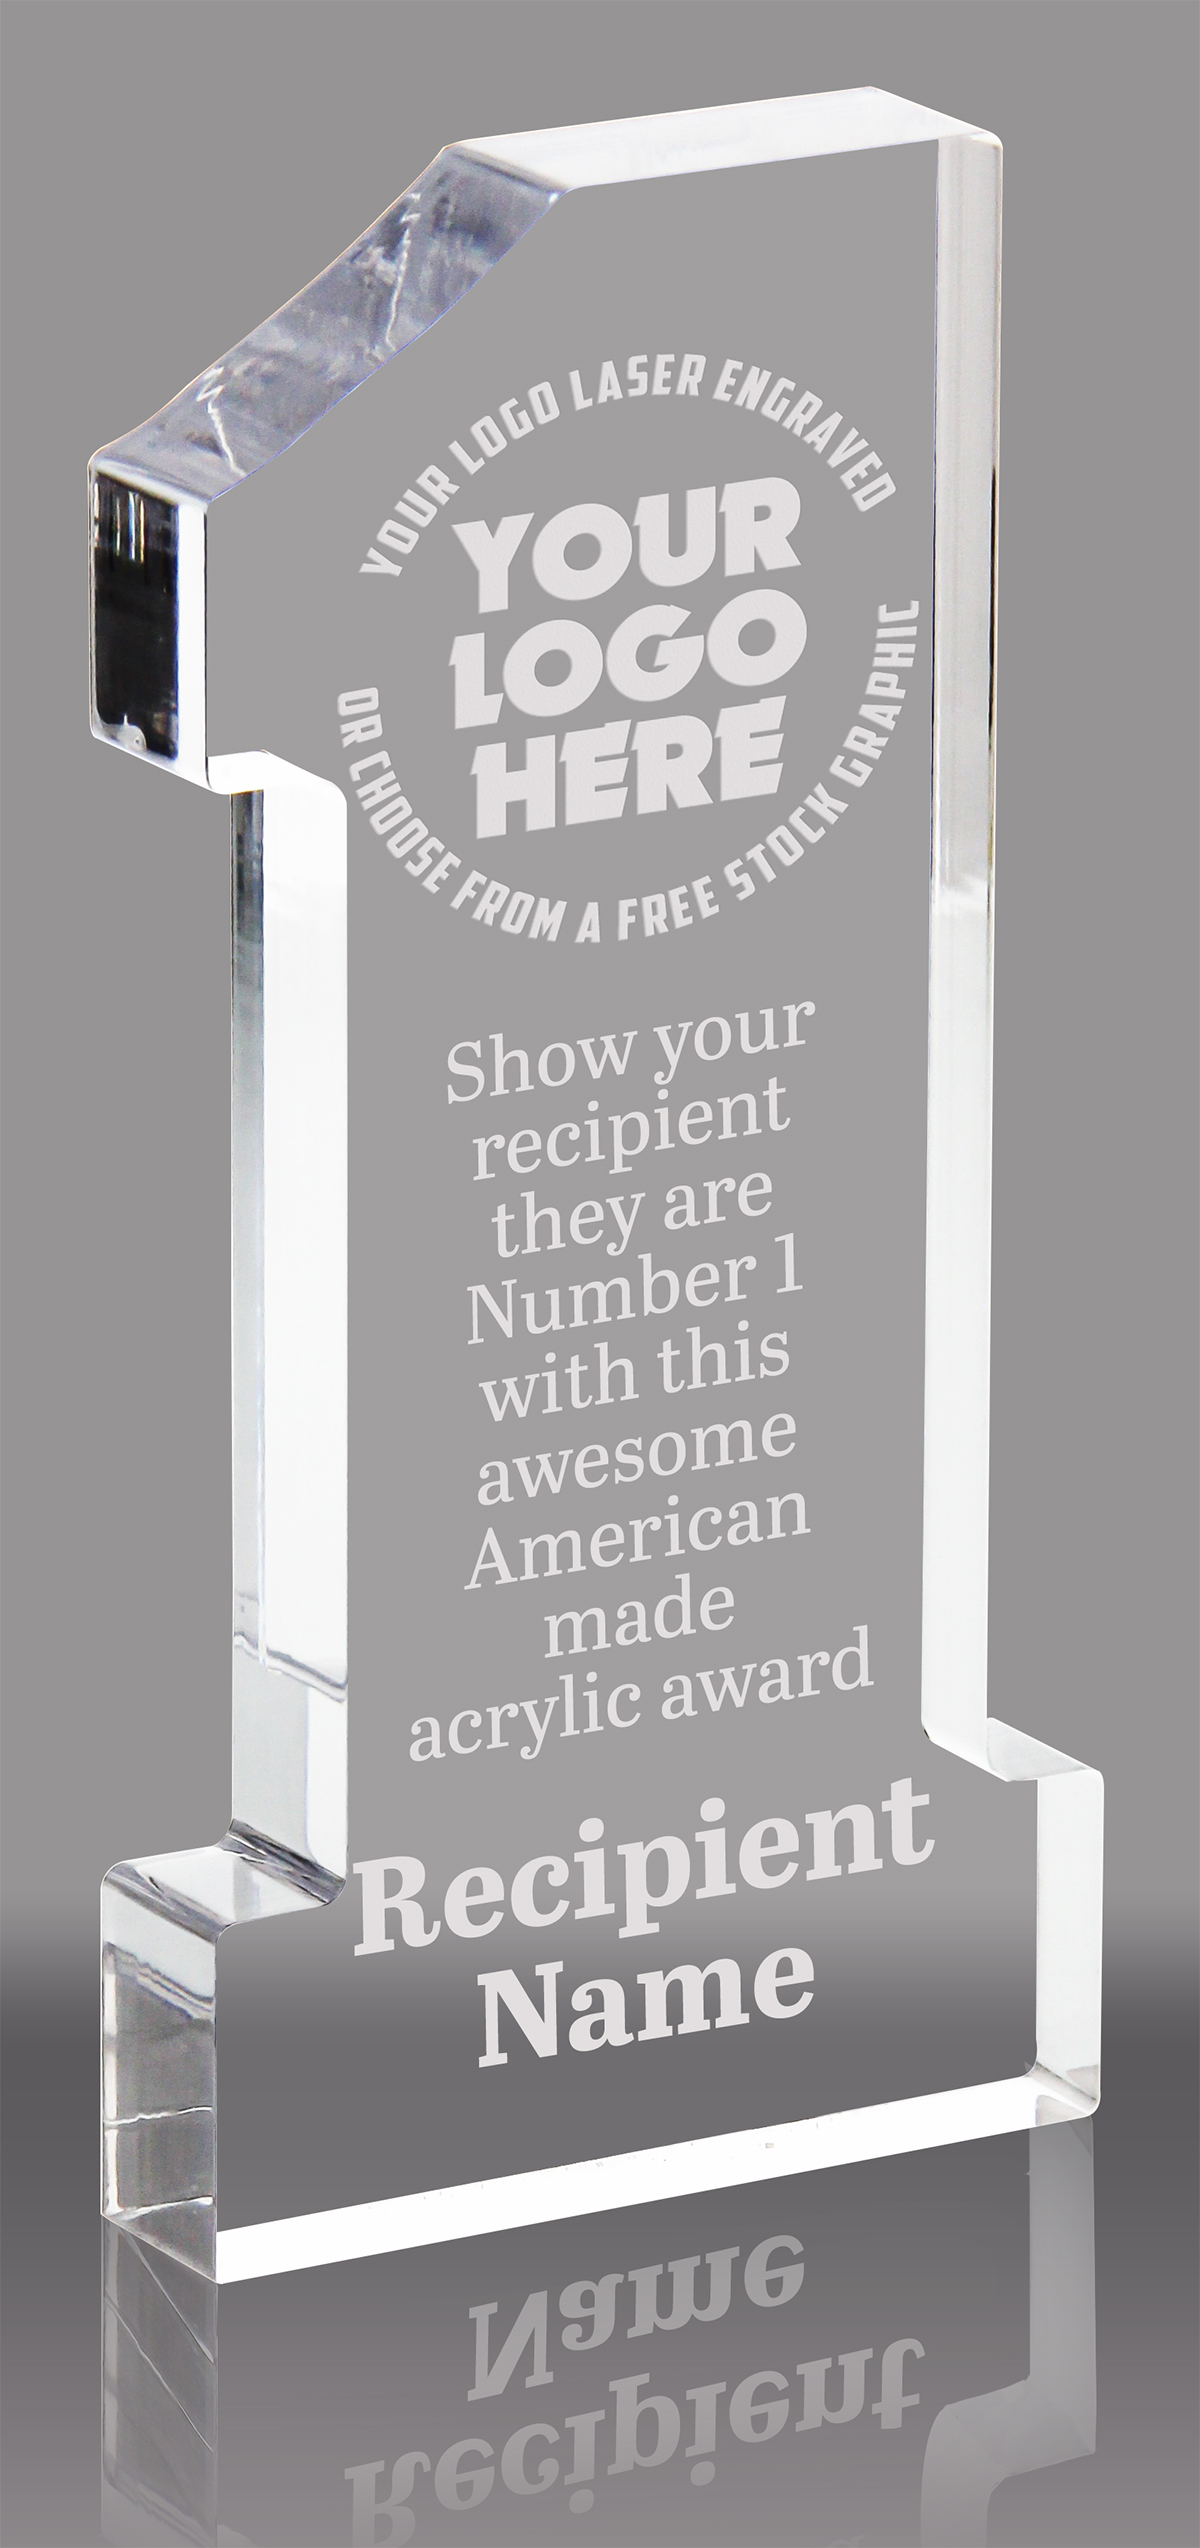 Acrylic Rounds Award - Trophy Award Co.